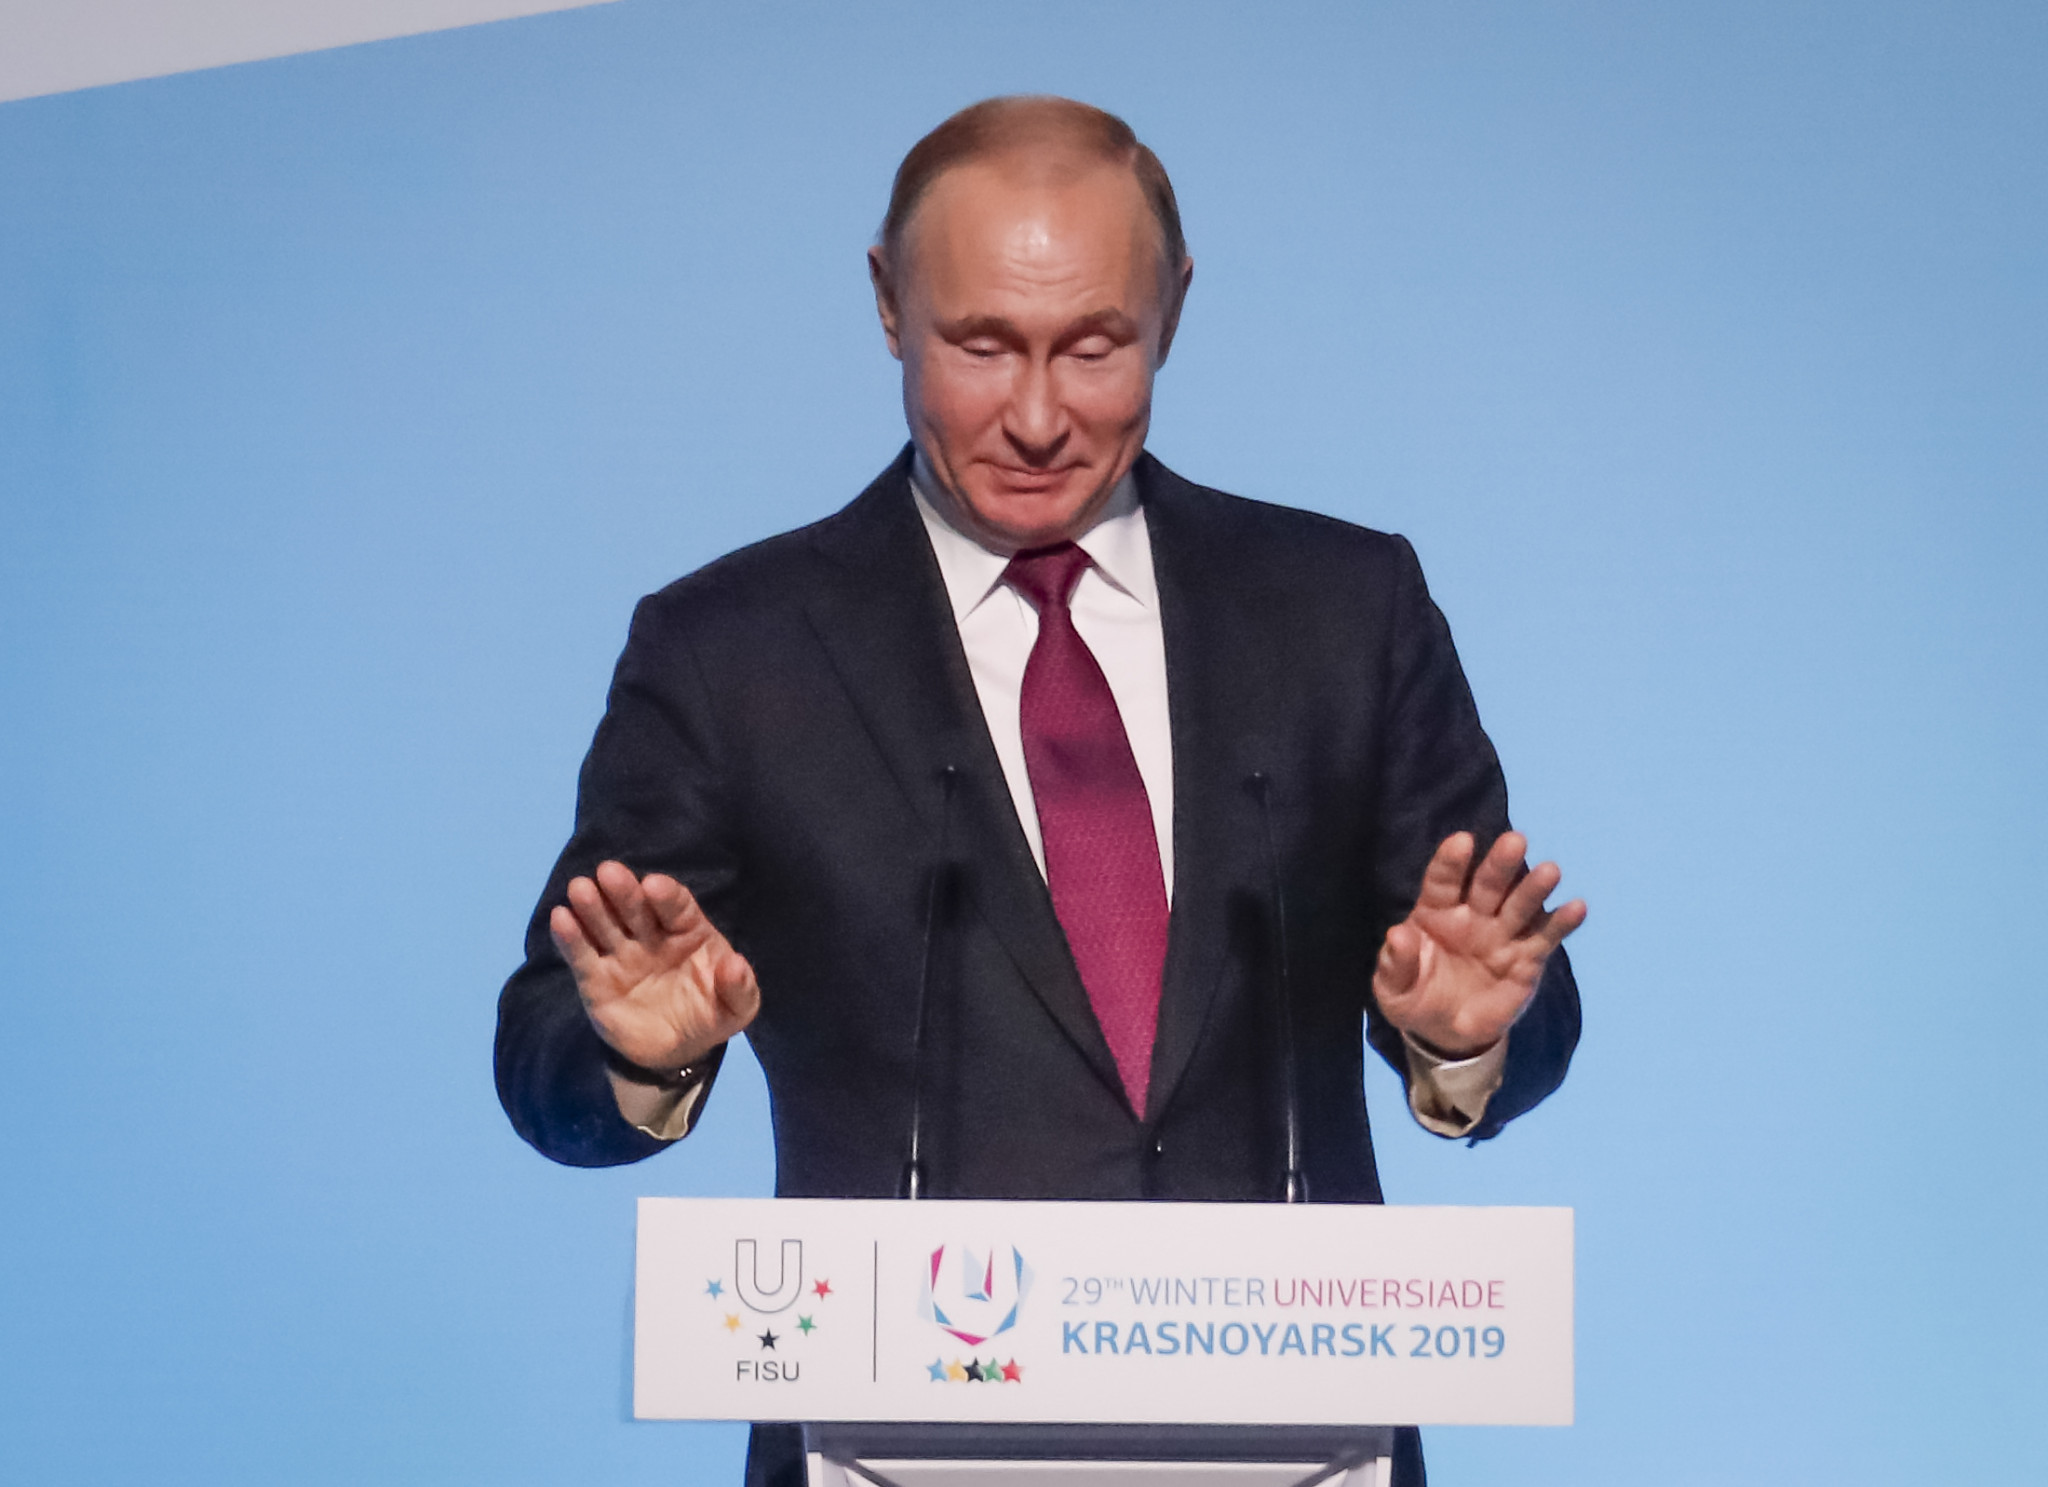 Russian President Vladimir Putin declared the Winter Unviersiade open ©Getty Images